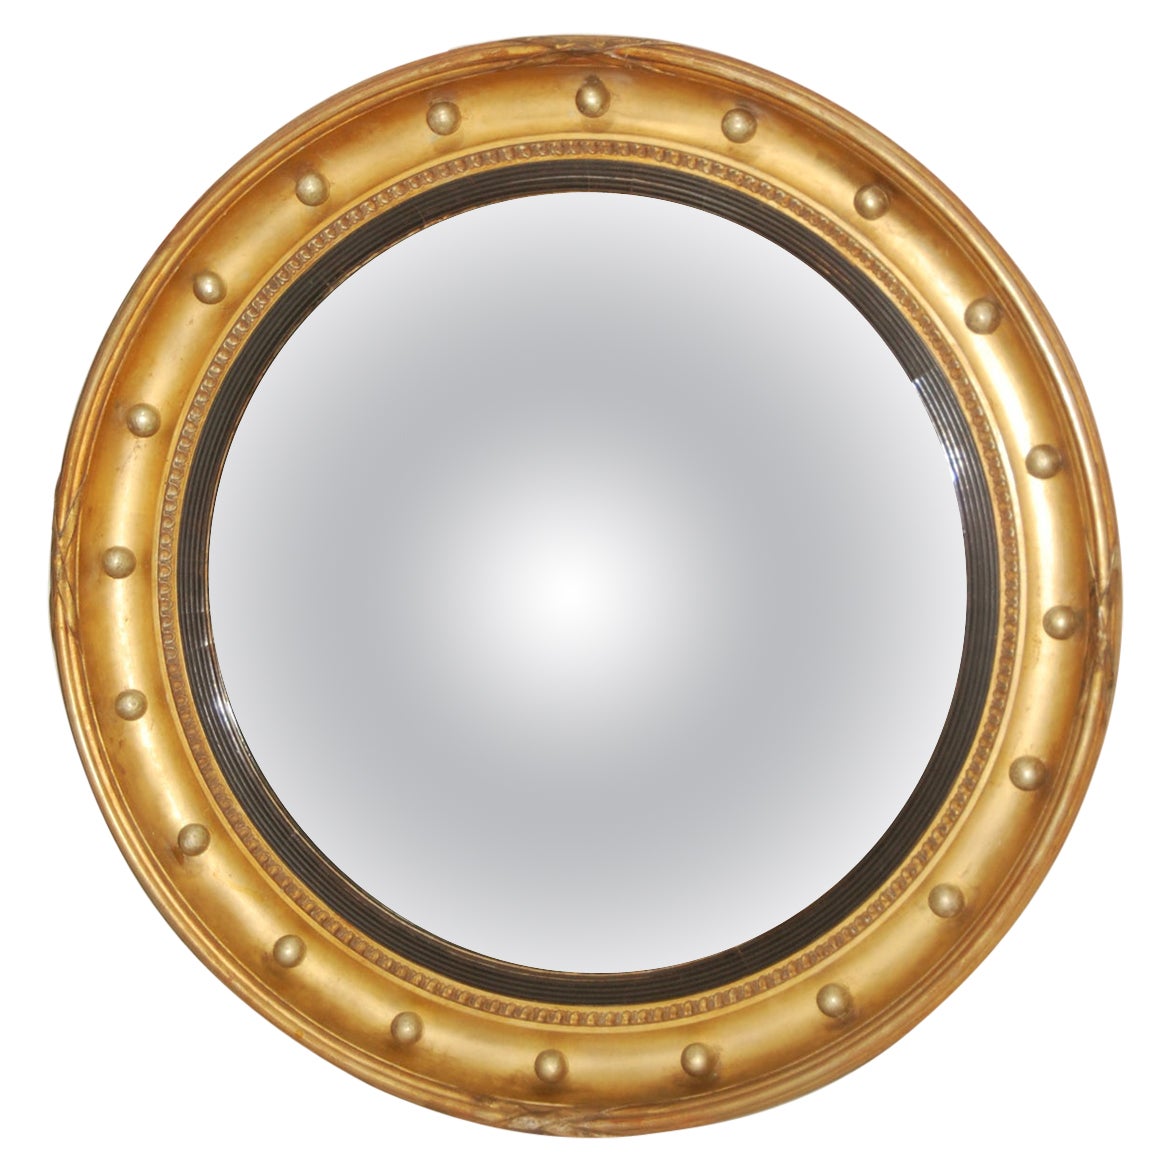 English Regency  Style  Round Convex Giltwood Mirror, circa 1850